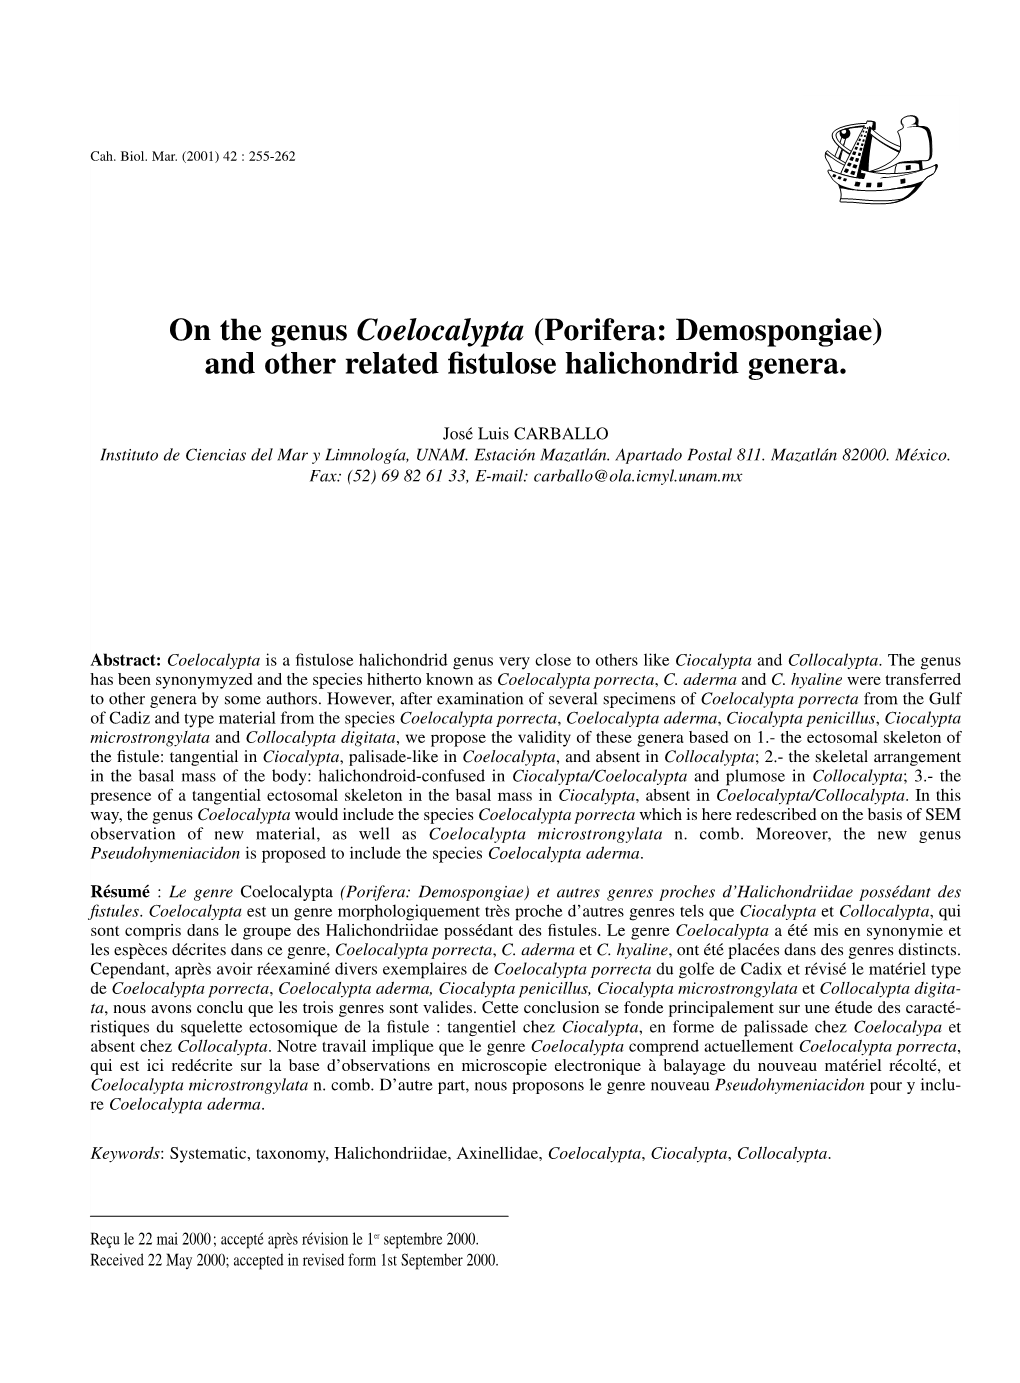 On the Genus Coelocalypta (Porifera: Demospongiae) and Other Related ﬁstulose Halichondrid Genera